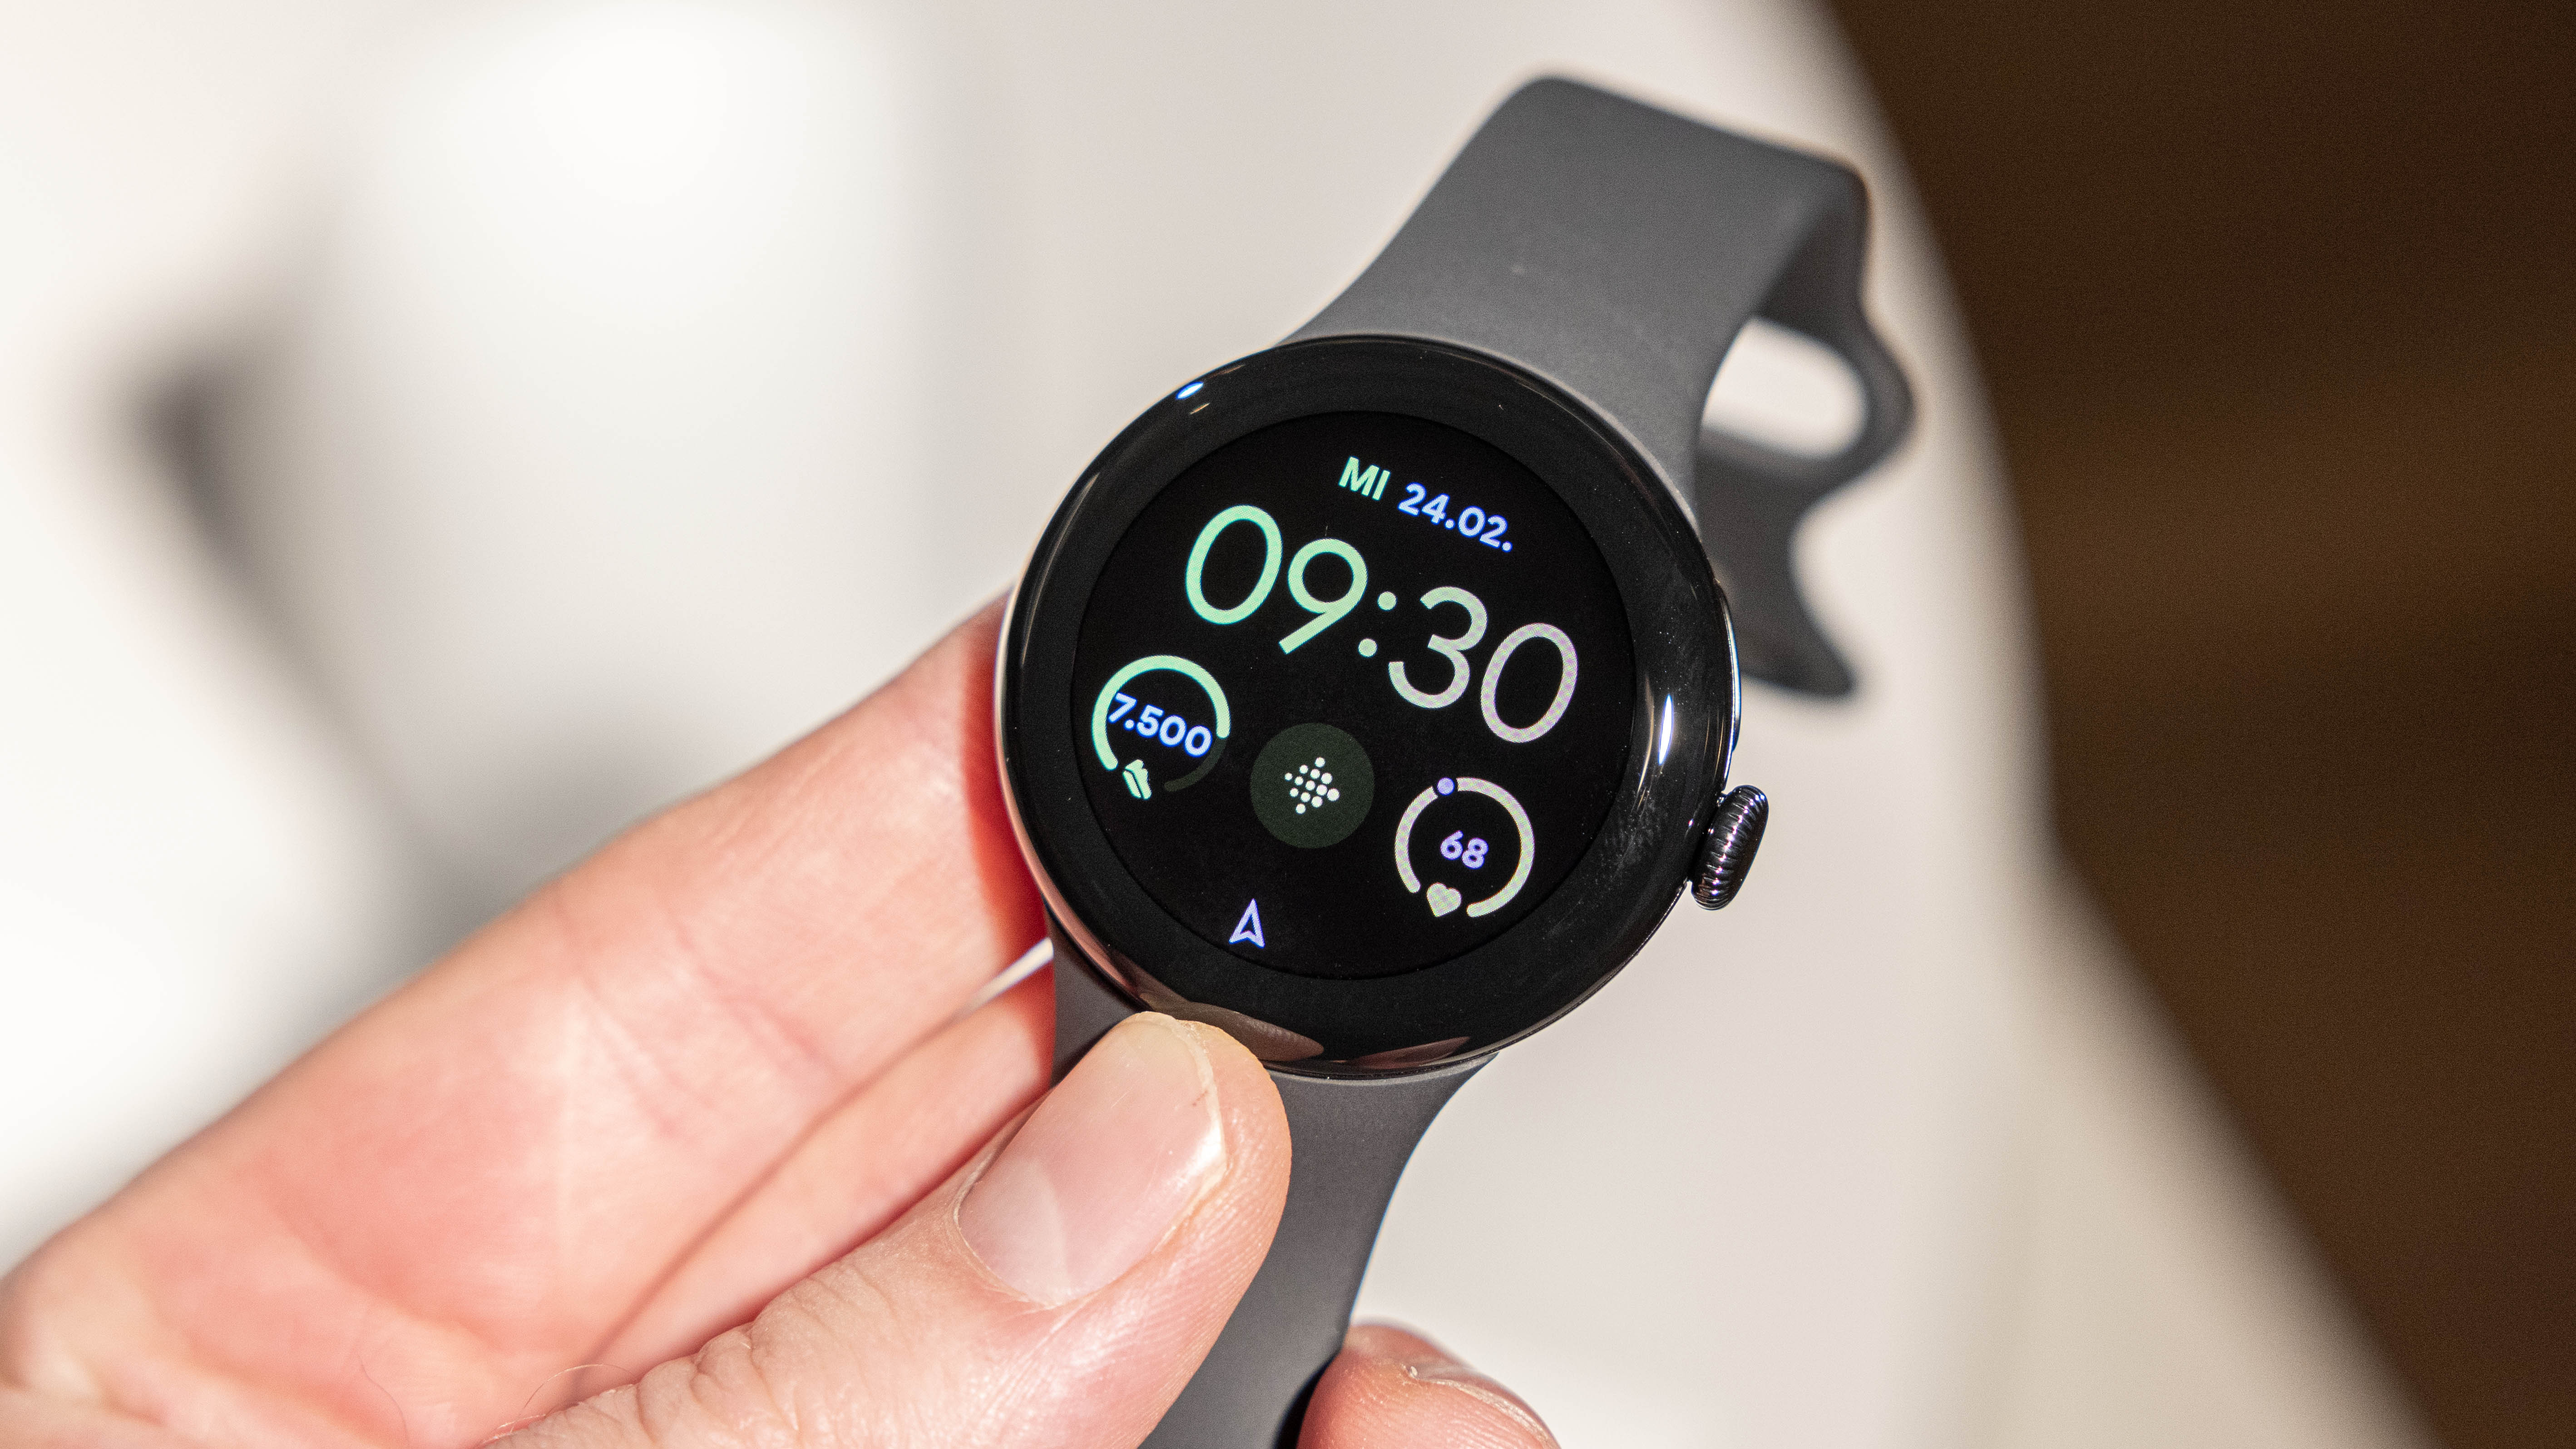 Google Pixel Watch 2 hands-on: New biometric sensors in a slightly